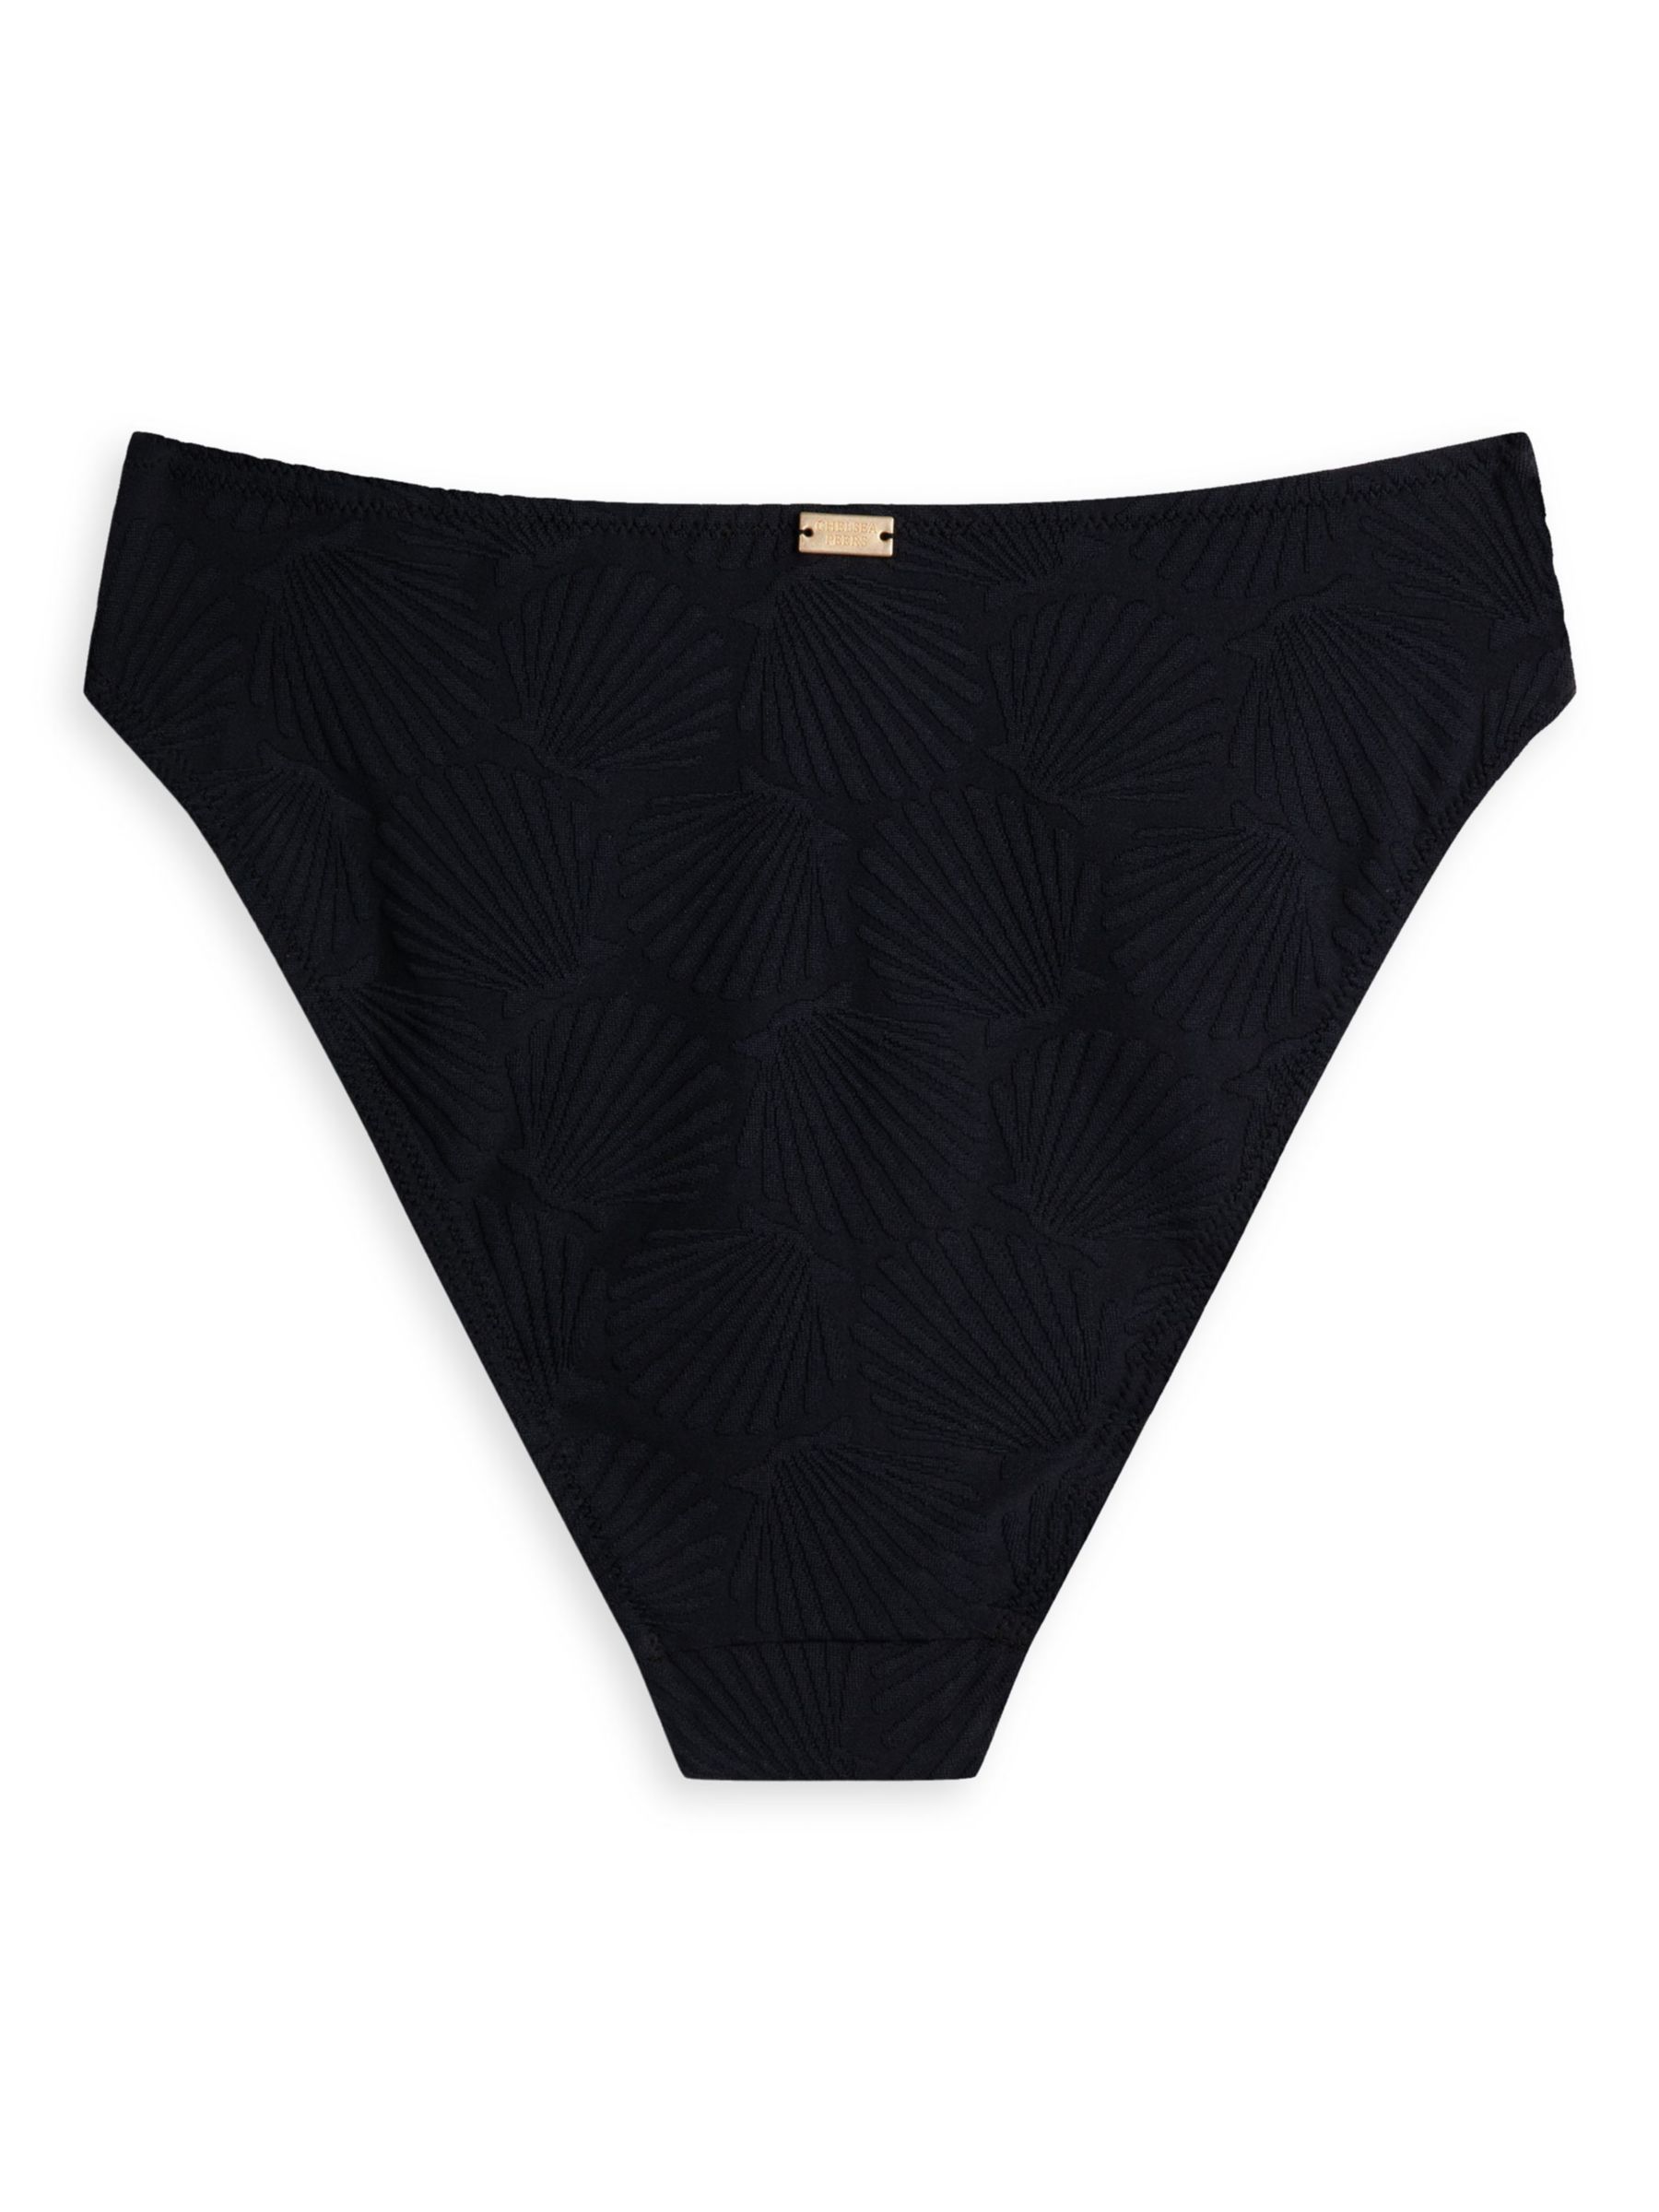 Chelsea Peers Jacquard Shell High Waist Bikini Bottoms, Black, 6